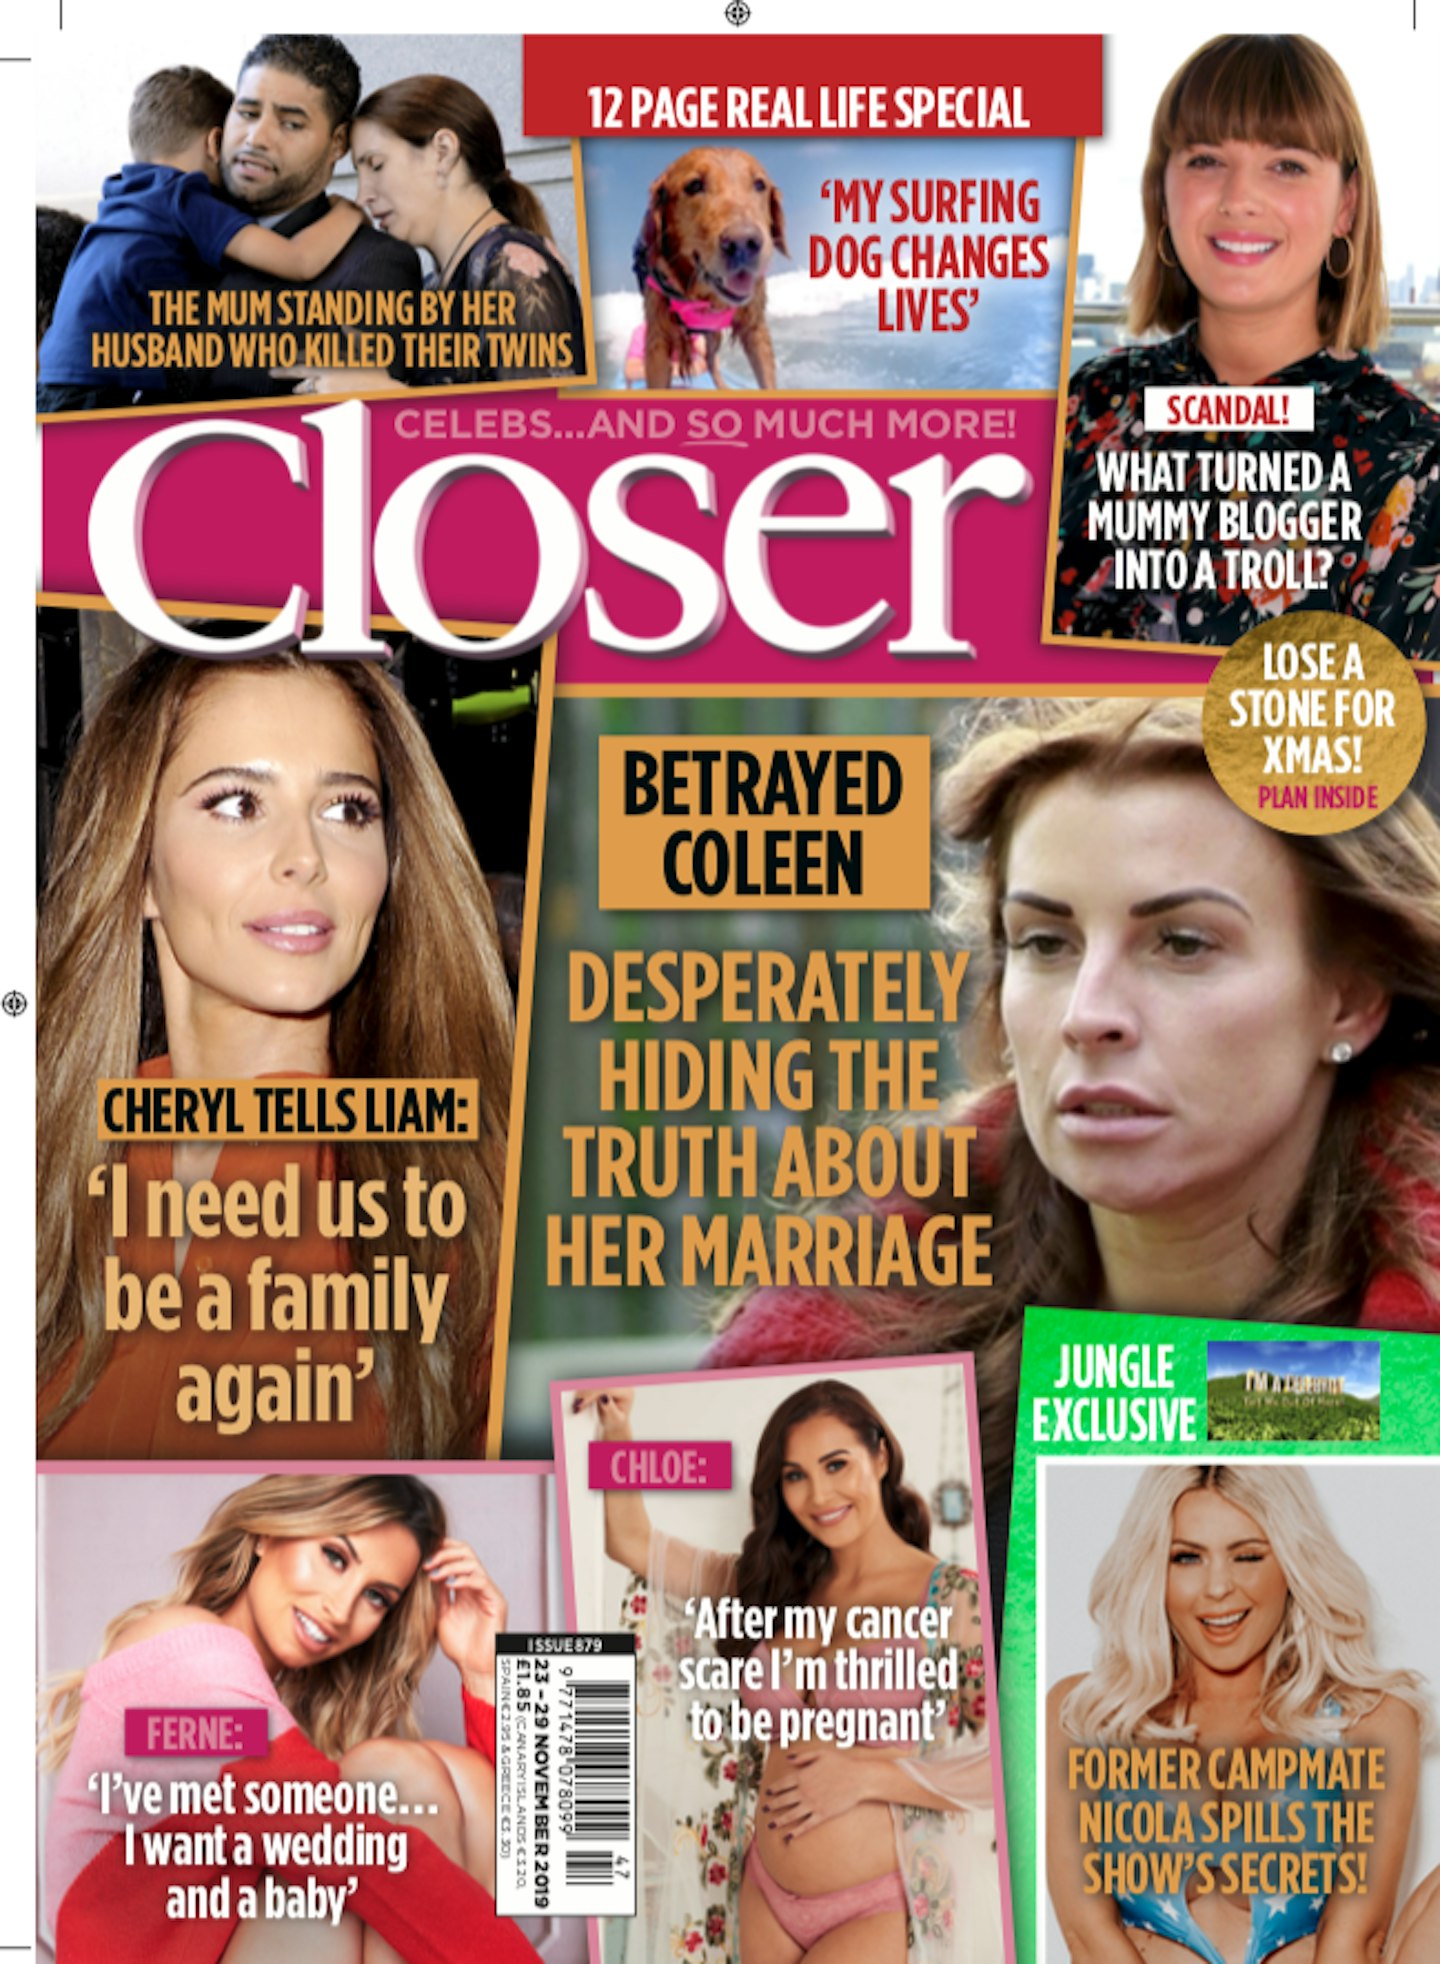 Closer magazine 